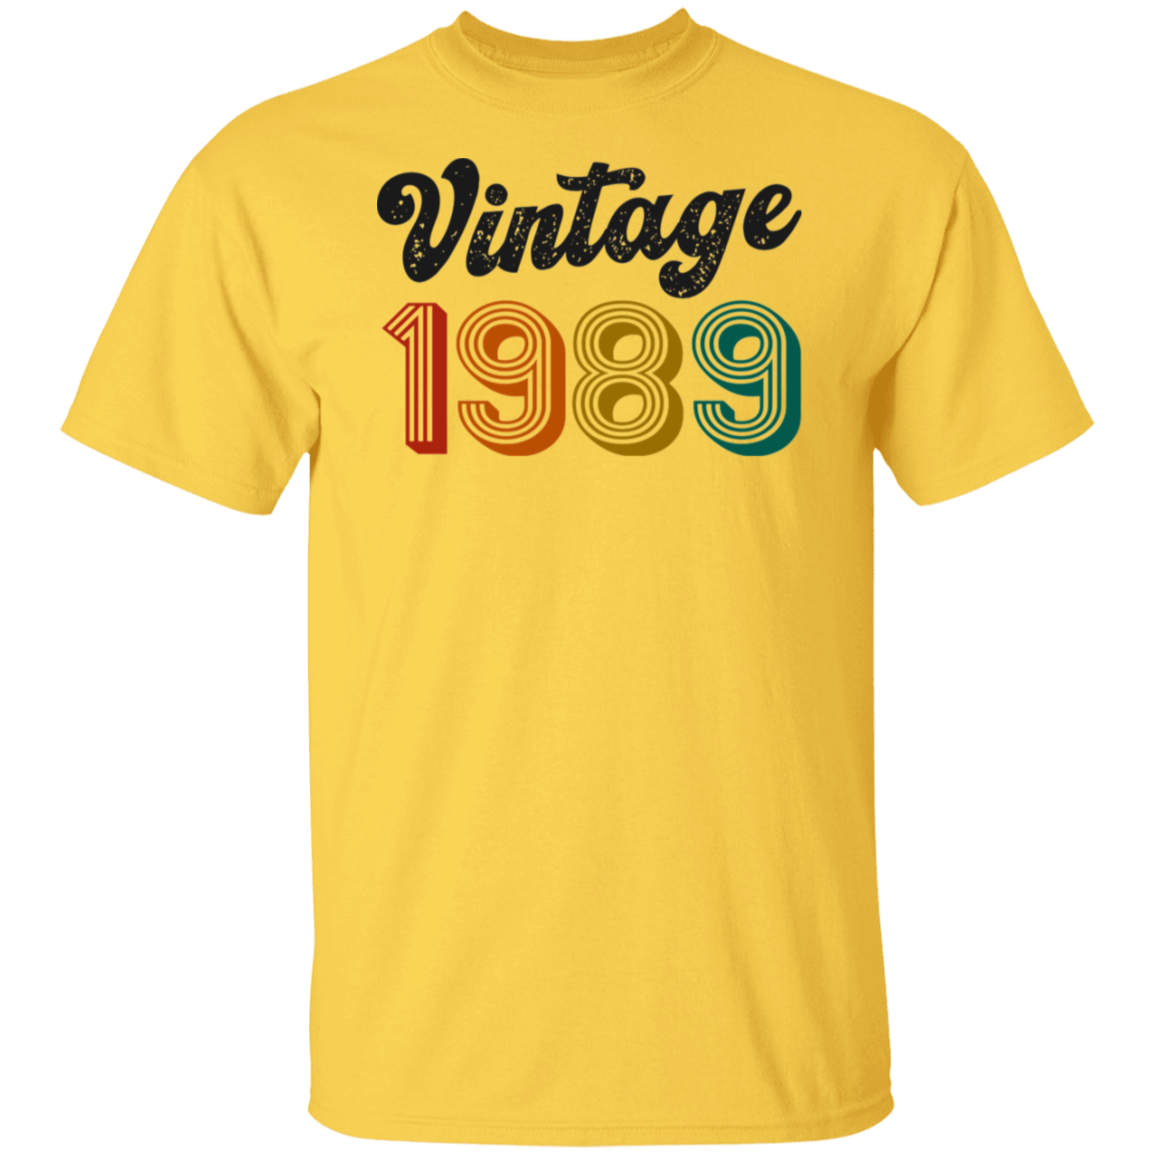 Vintage 1989 T-Shirt